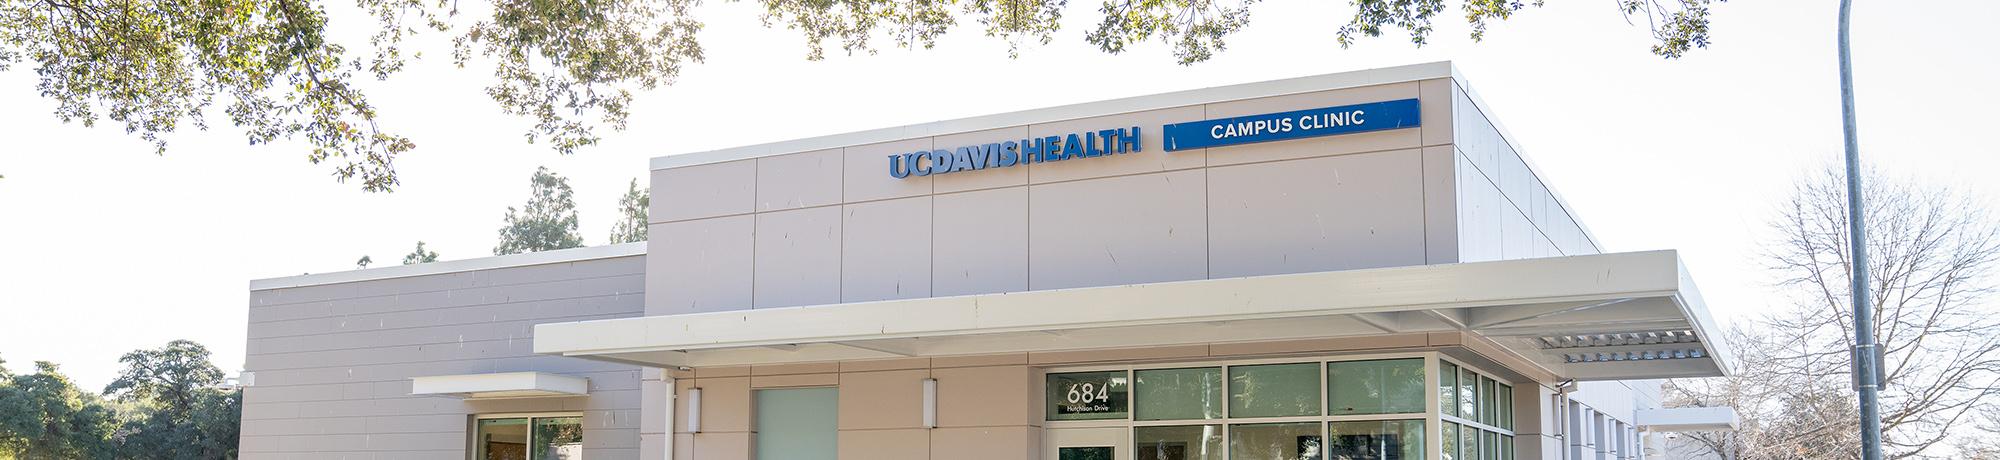 UC Davis Health Clinic on the Davis campus